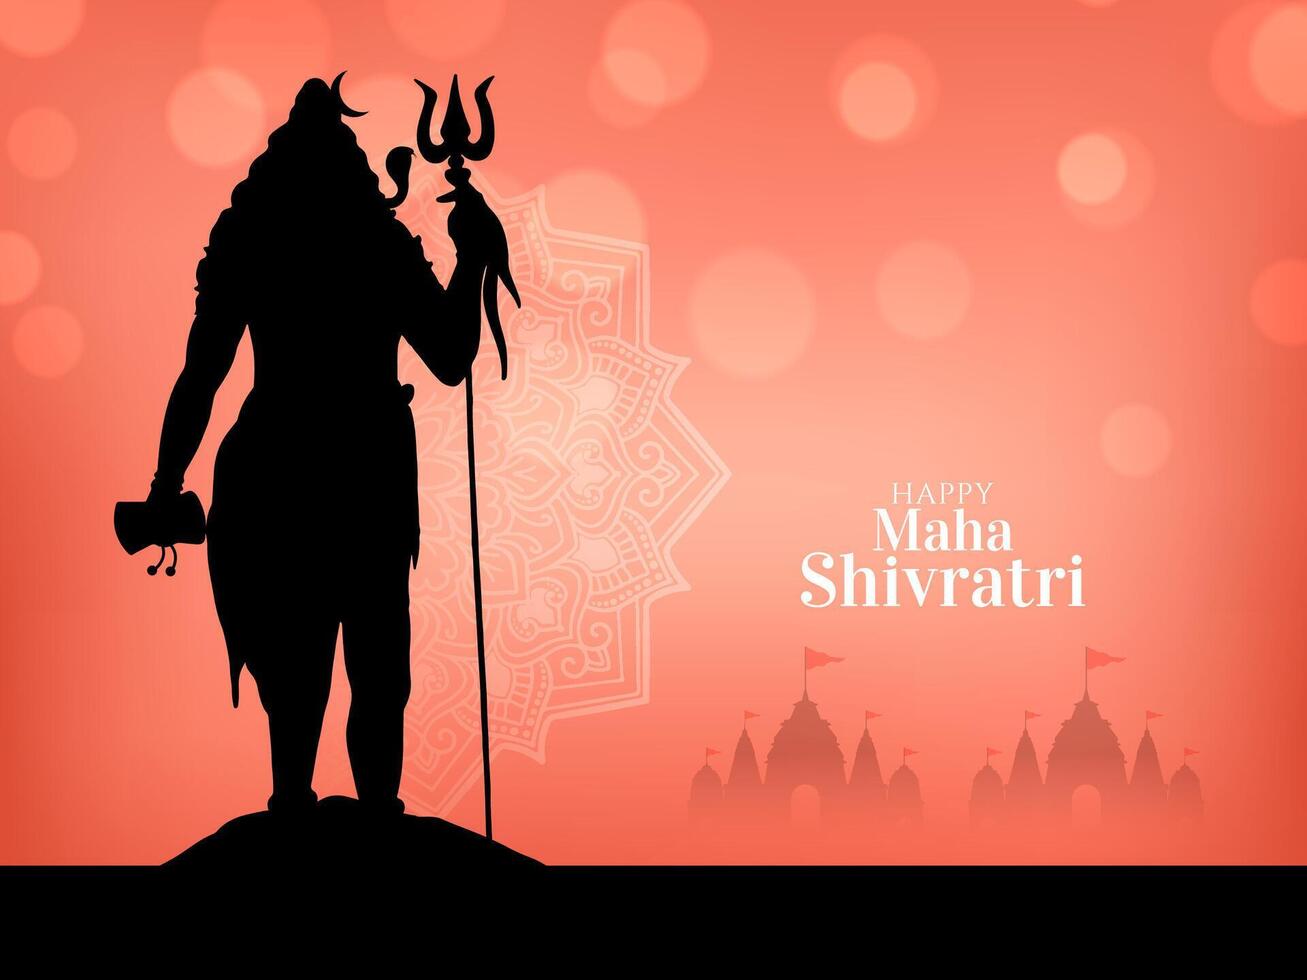 gelukkig maha shivratri traditioneel Indisch festival viering achtergrond vector